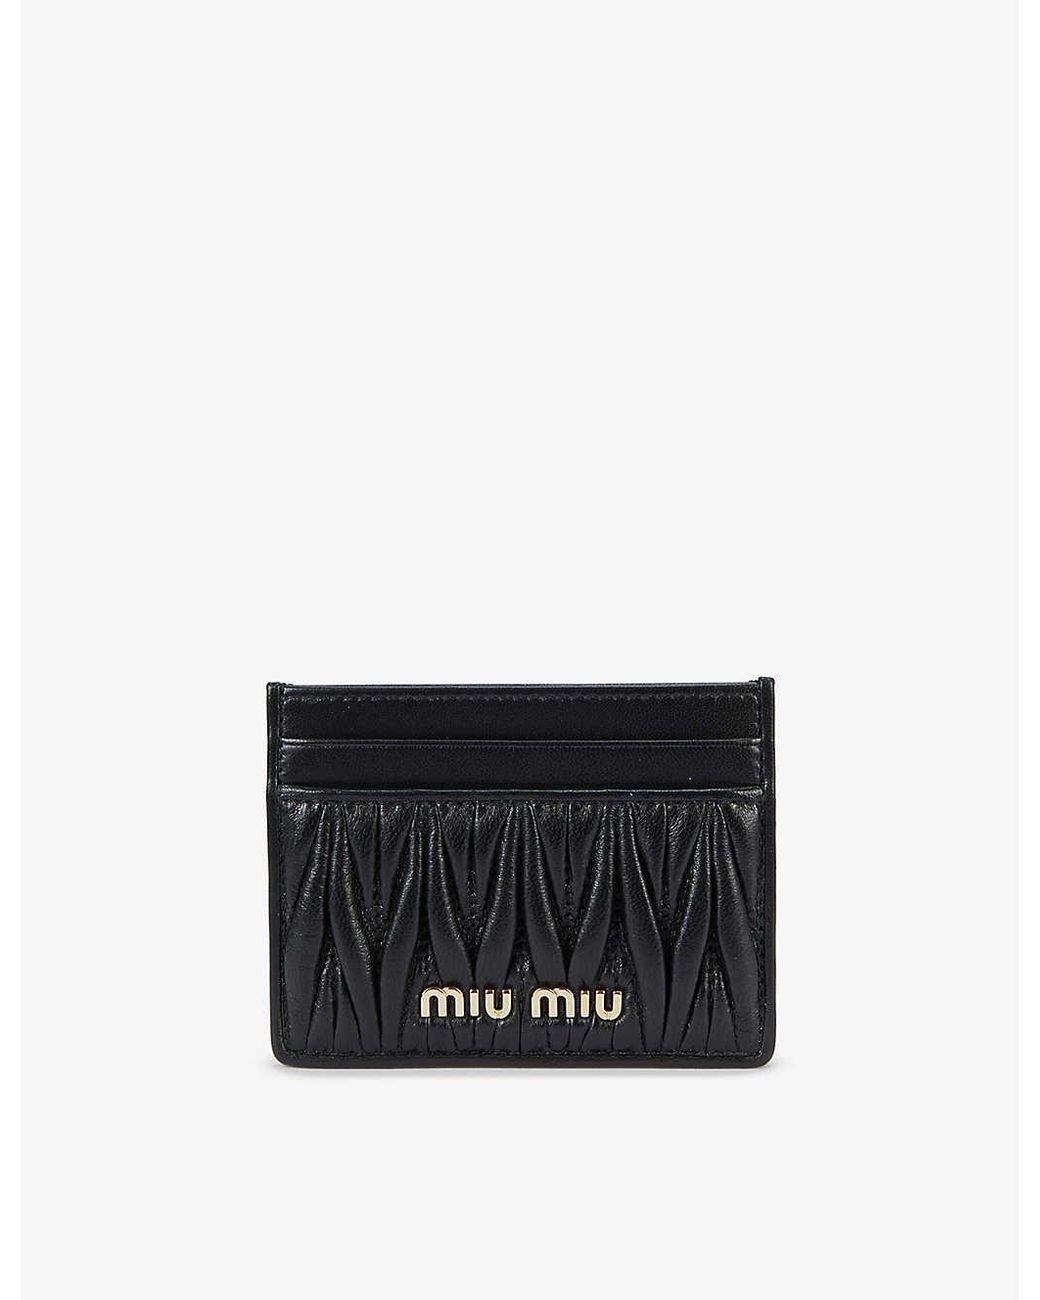 Miu Miu Matelassé Quilted Leather Card Holder in Nero (Black) - Lyst